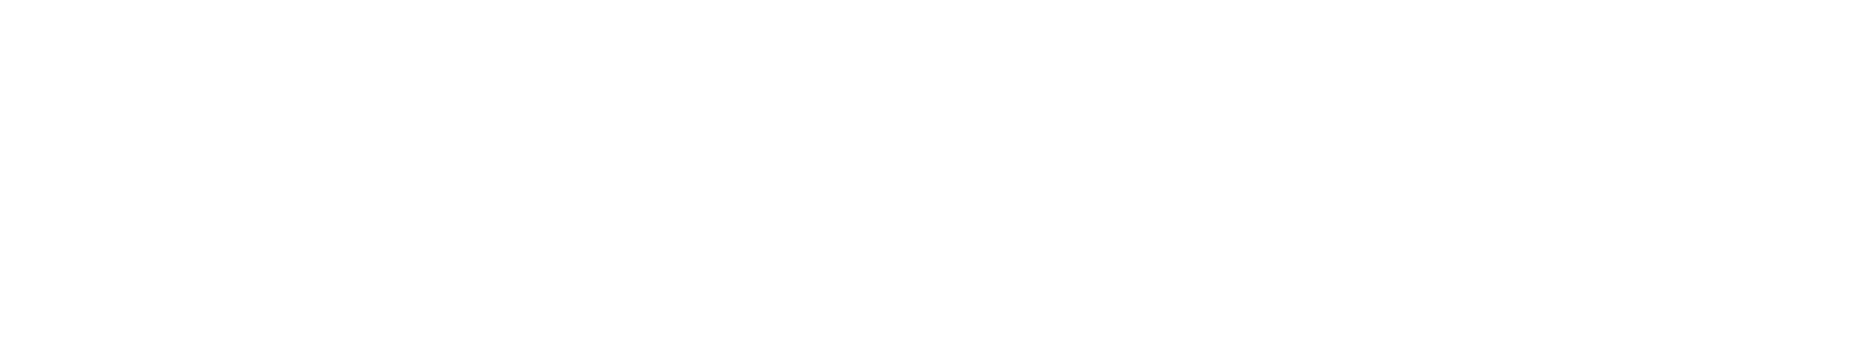 UC Santa Cruz Logo - Everett Program - Home